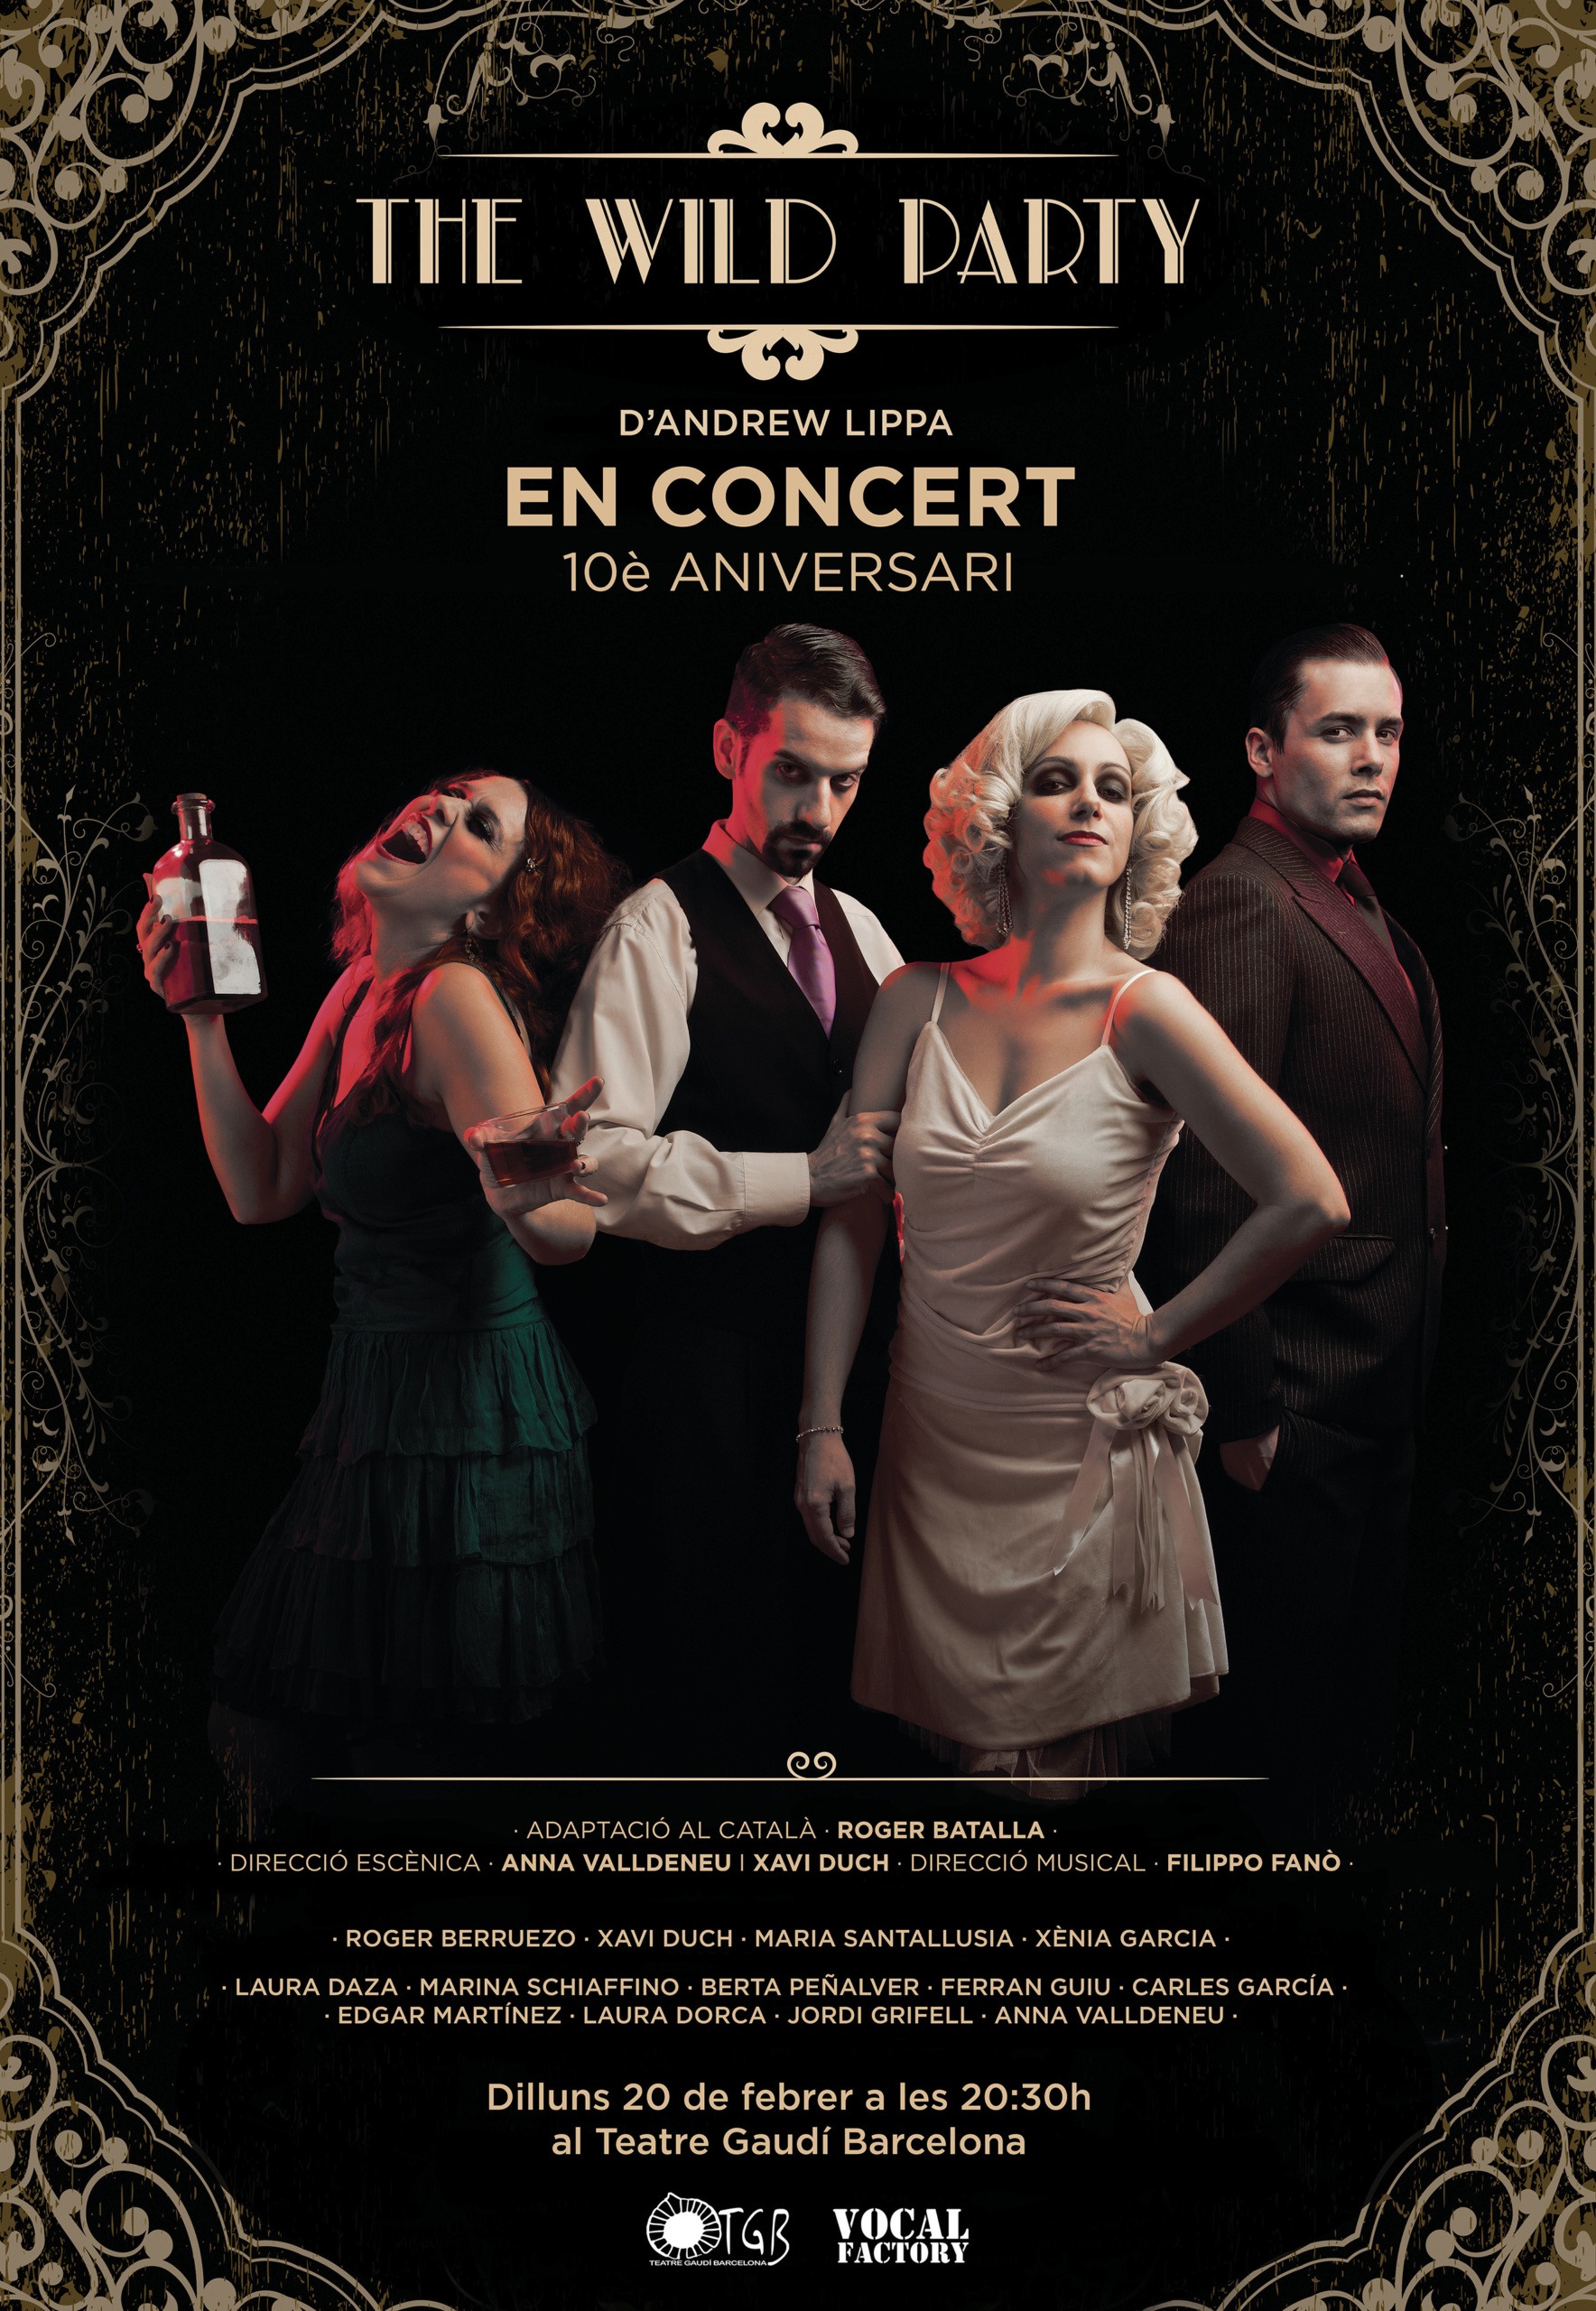 The Wild Party en Concert al Teatre Gaudí